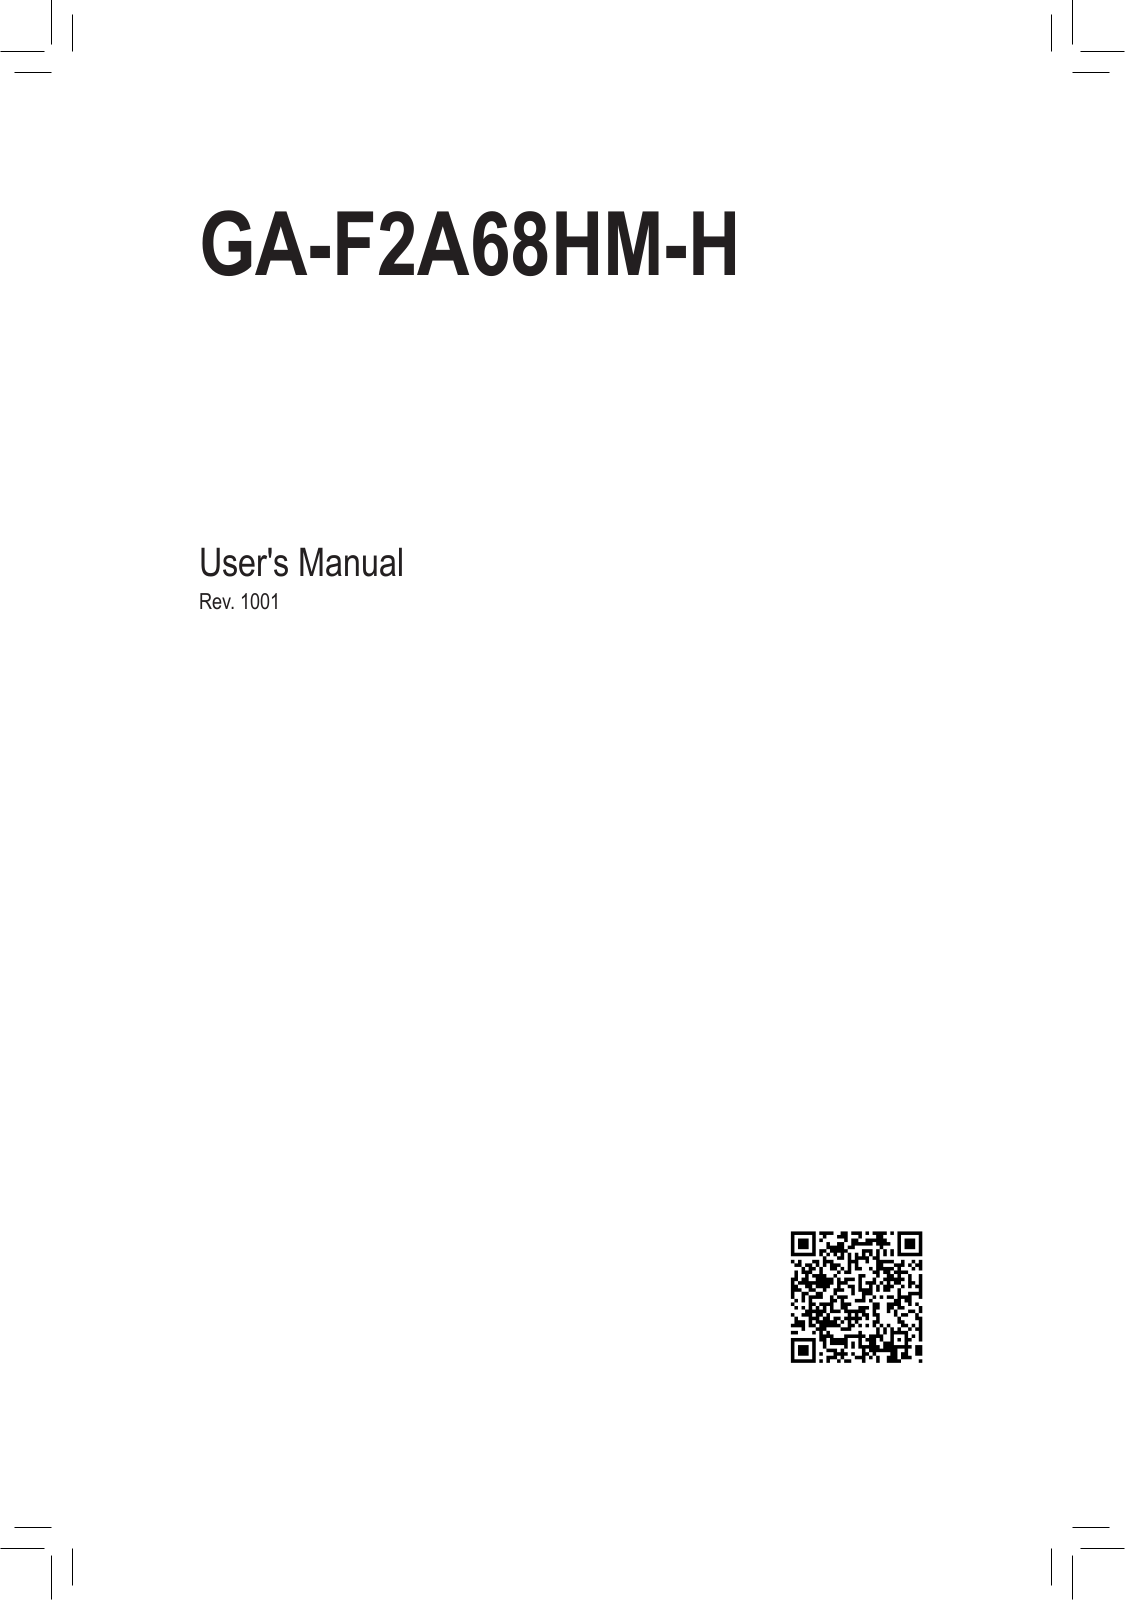 Gigabyte GA-F2A68HM-H Manual